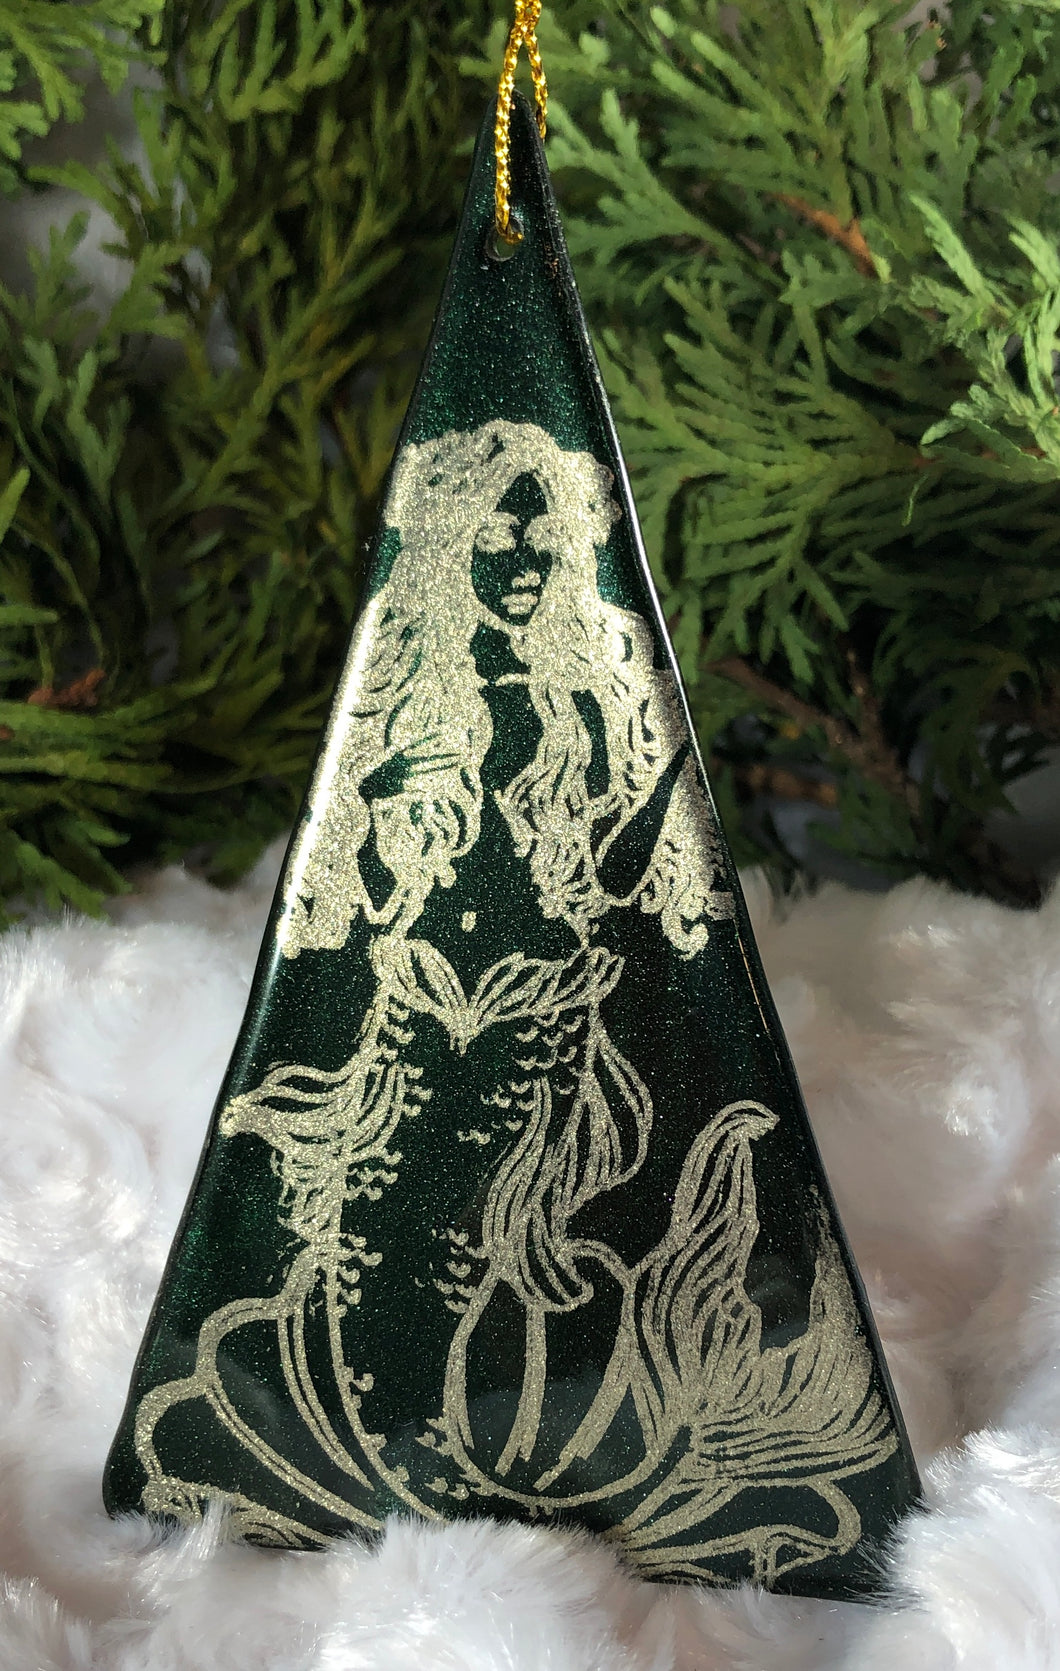 Holiday Ornaments - Green Mermaid